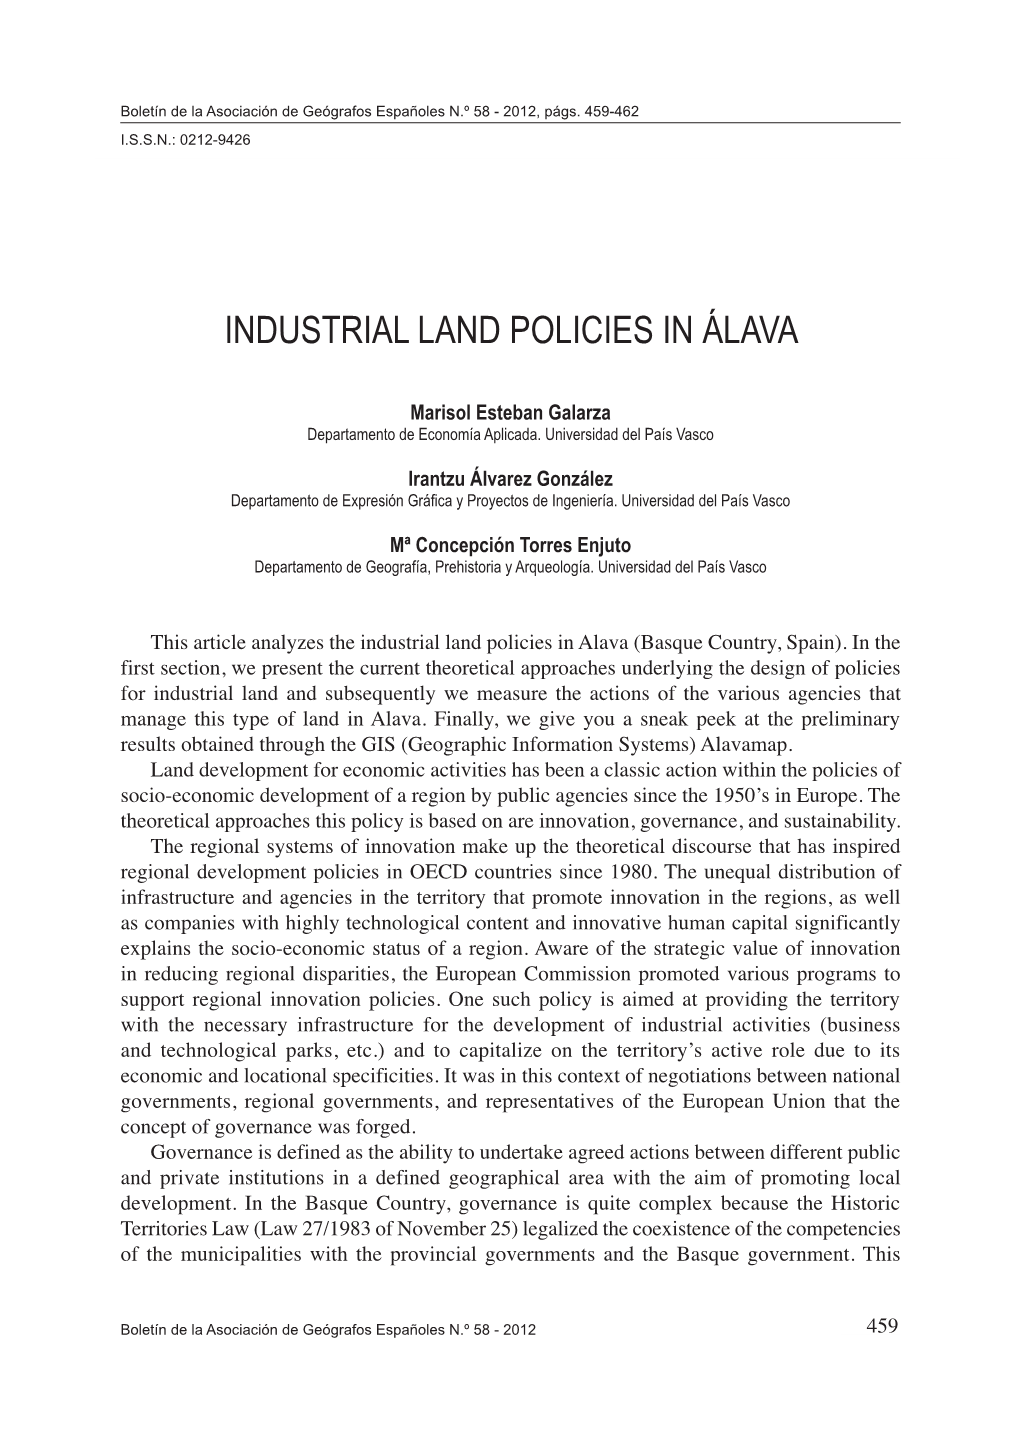 Industrial Land Policies in Álava